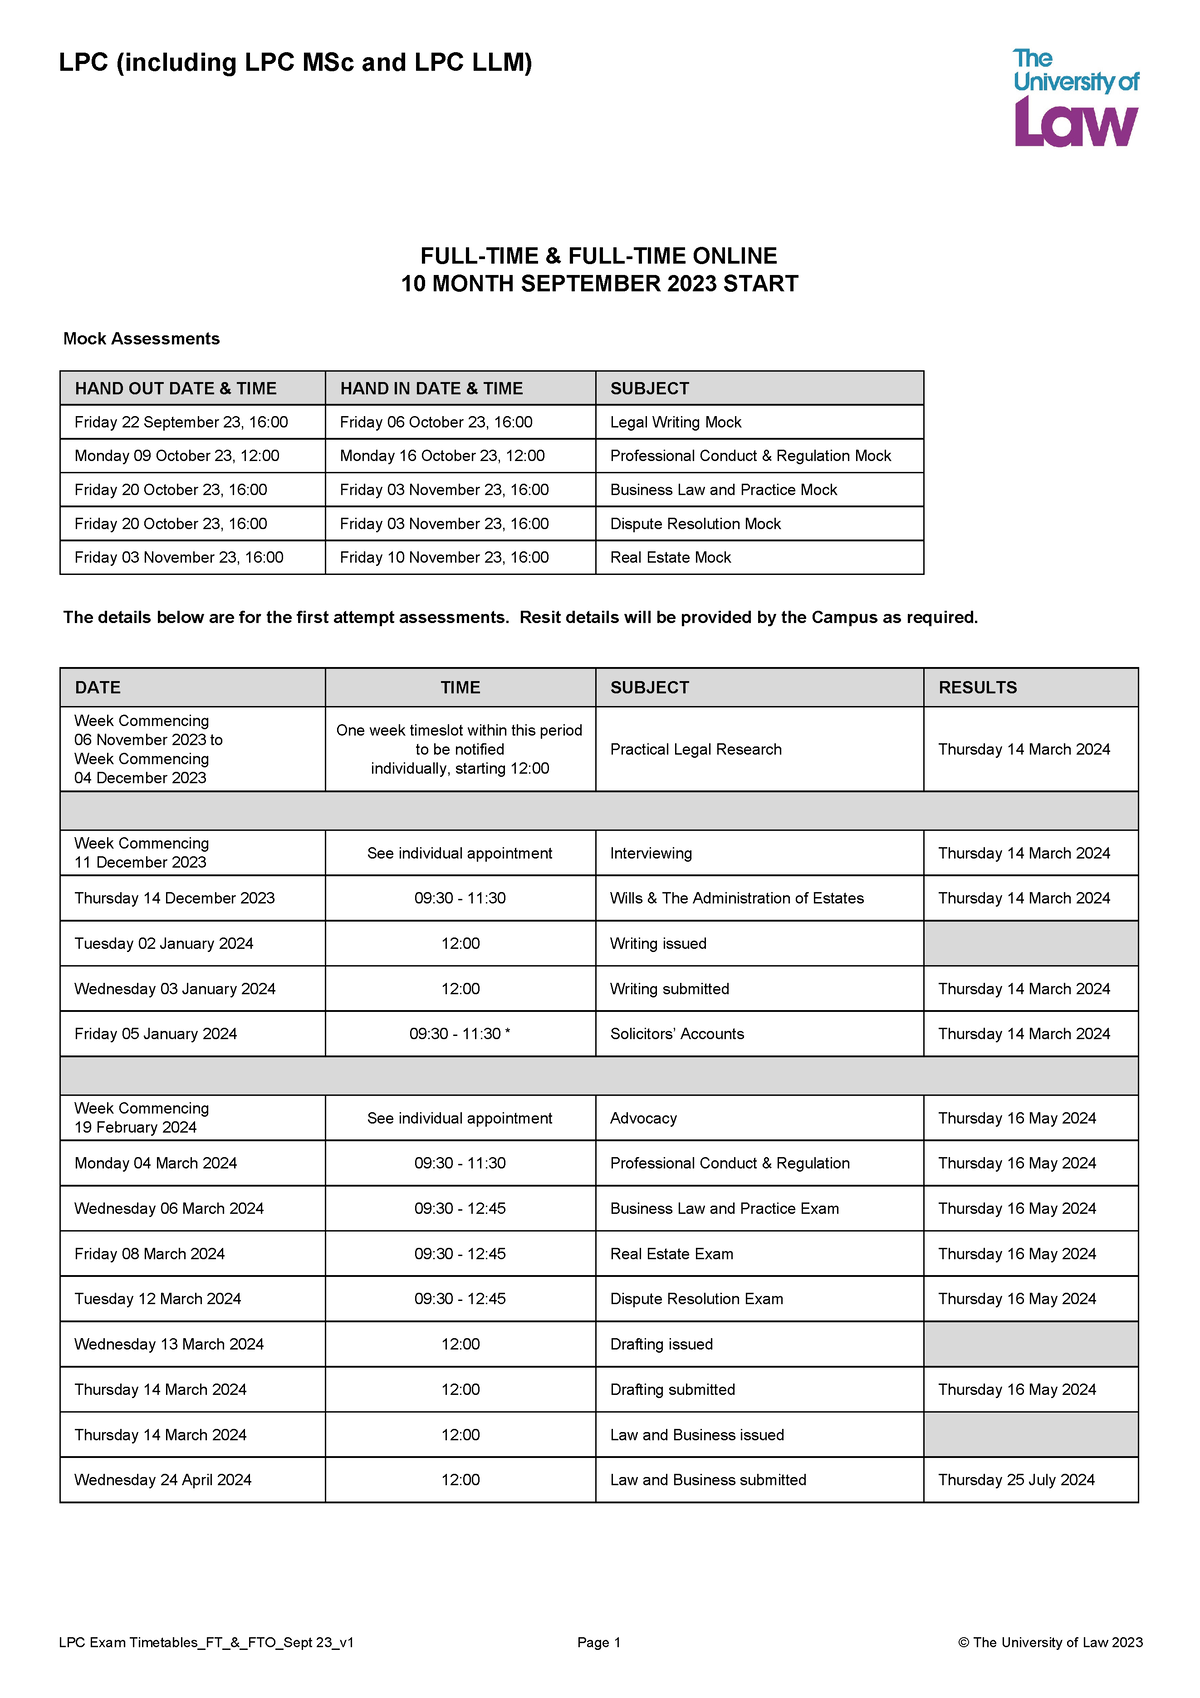 LPC Exam Timetable LPC (including LPC MSc and LPC LLM) Mock